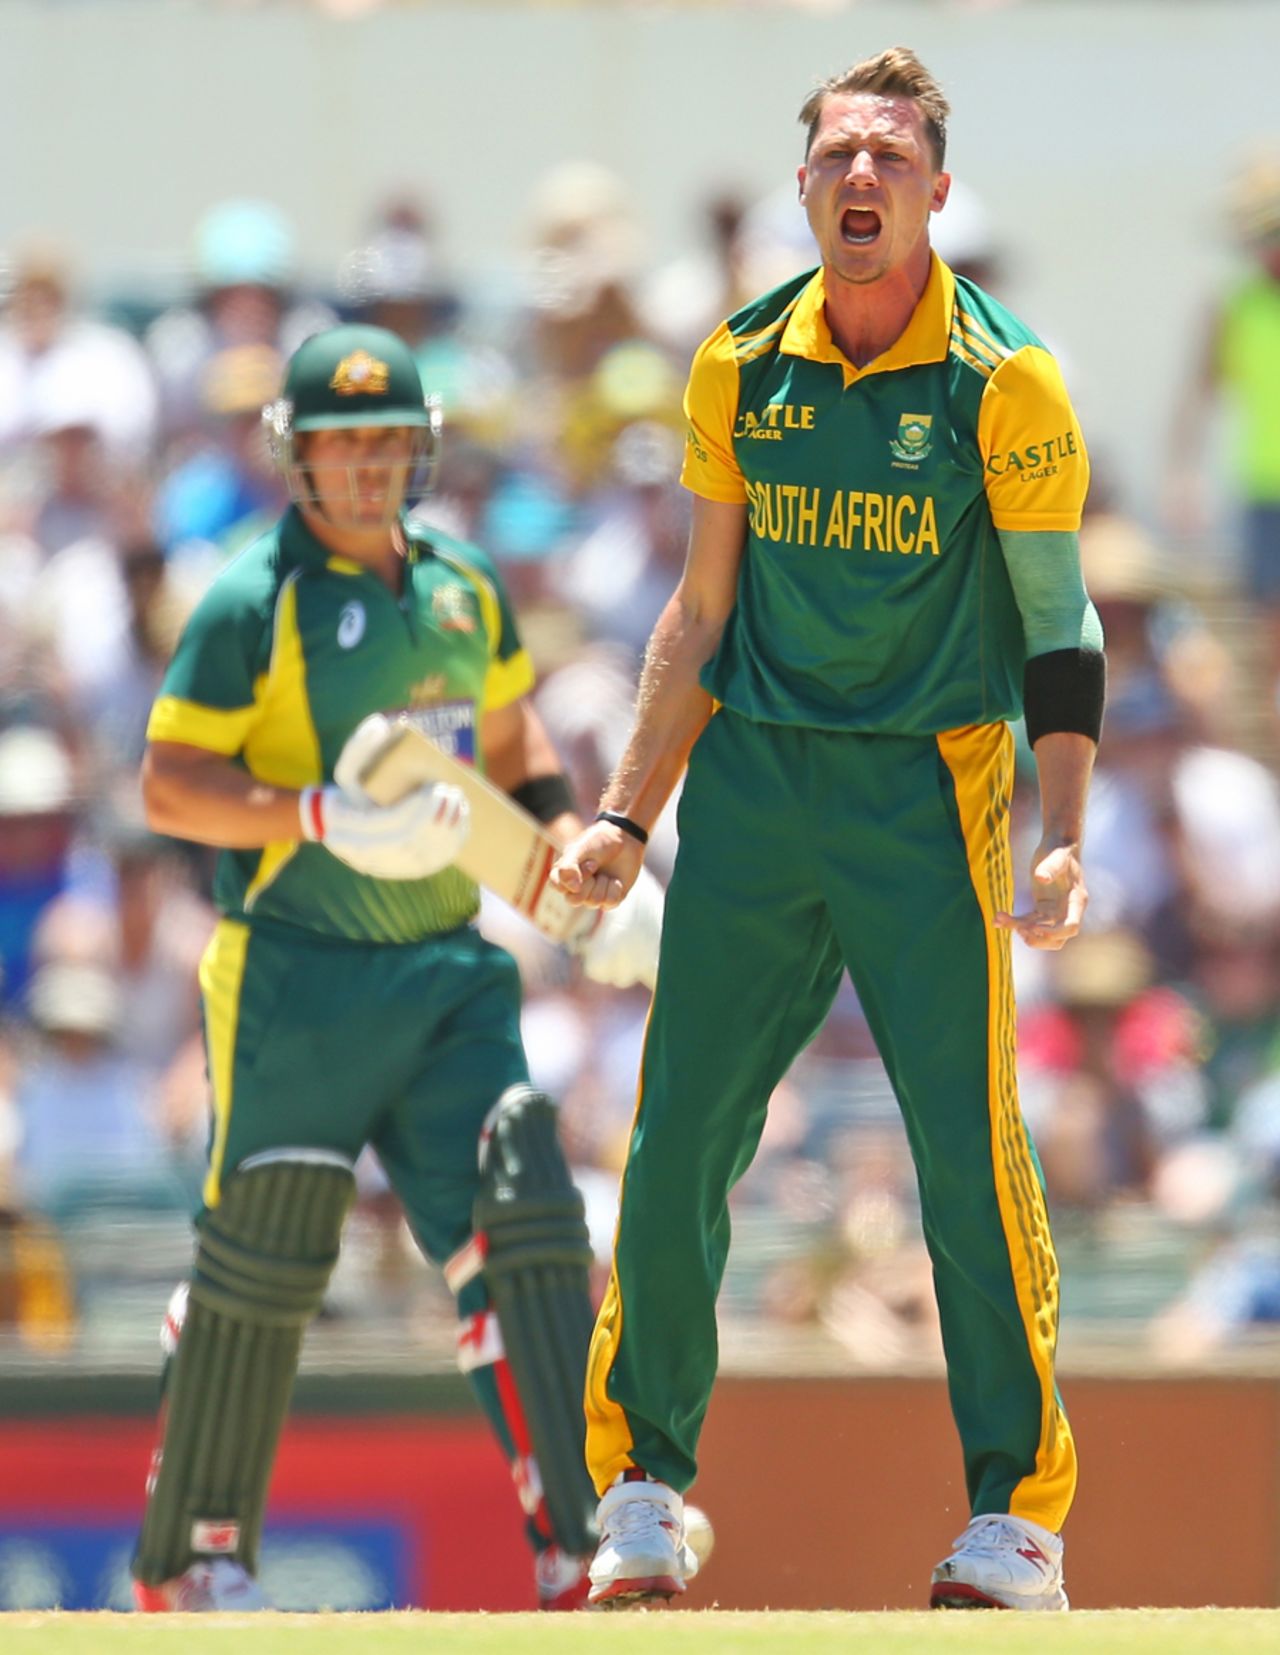 Dale Steyn got rid of Aaron Finch for 8, Australia v South Africa, 2nd ODI, Perth, November 16, 2014